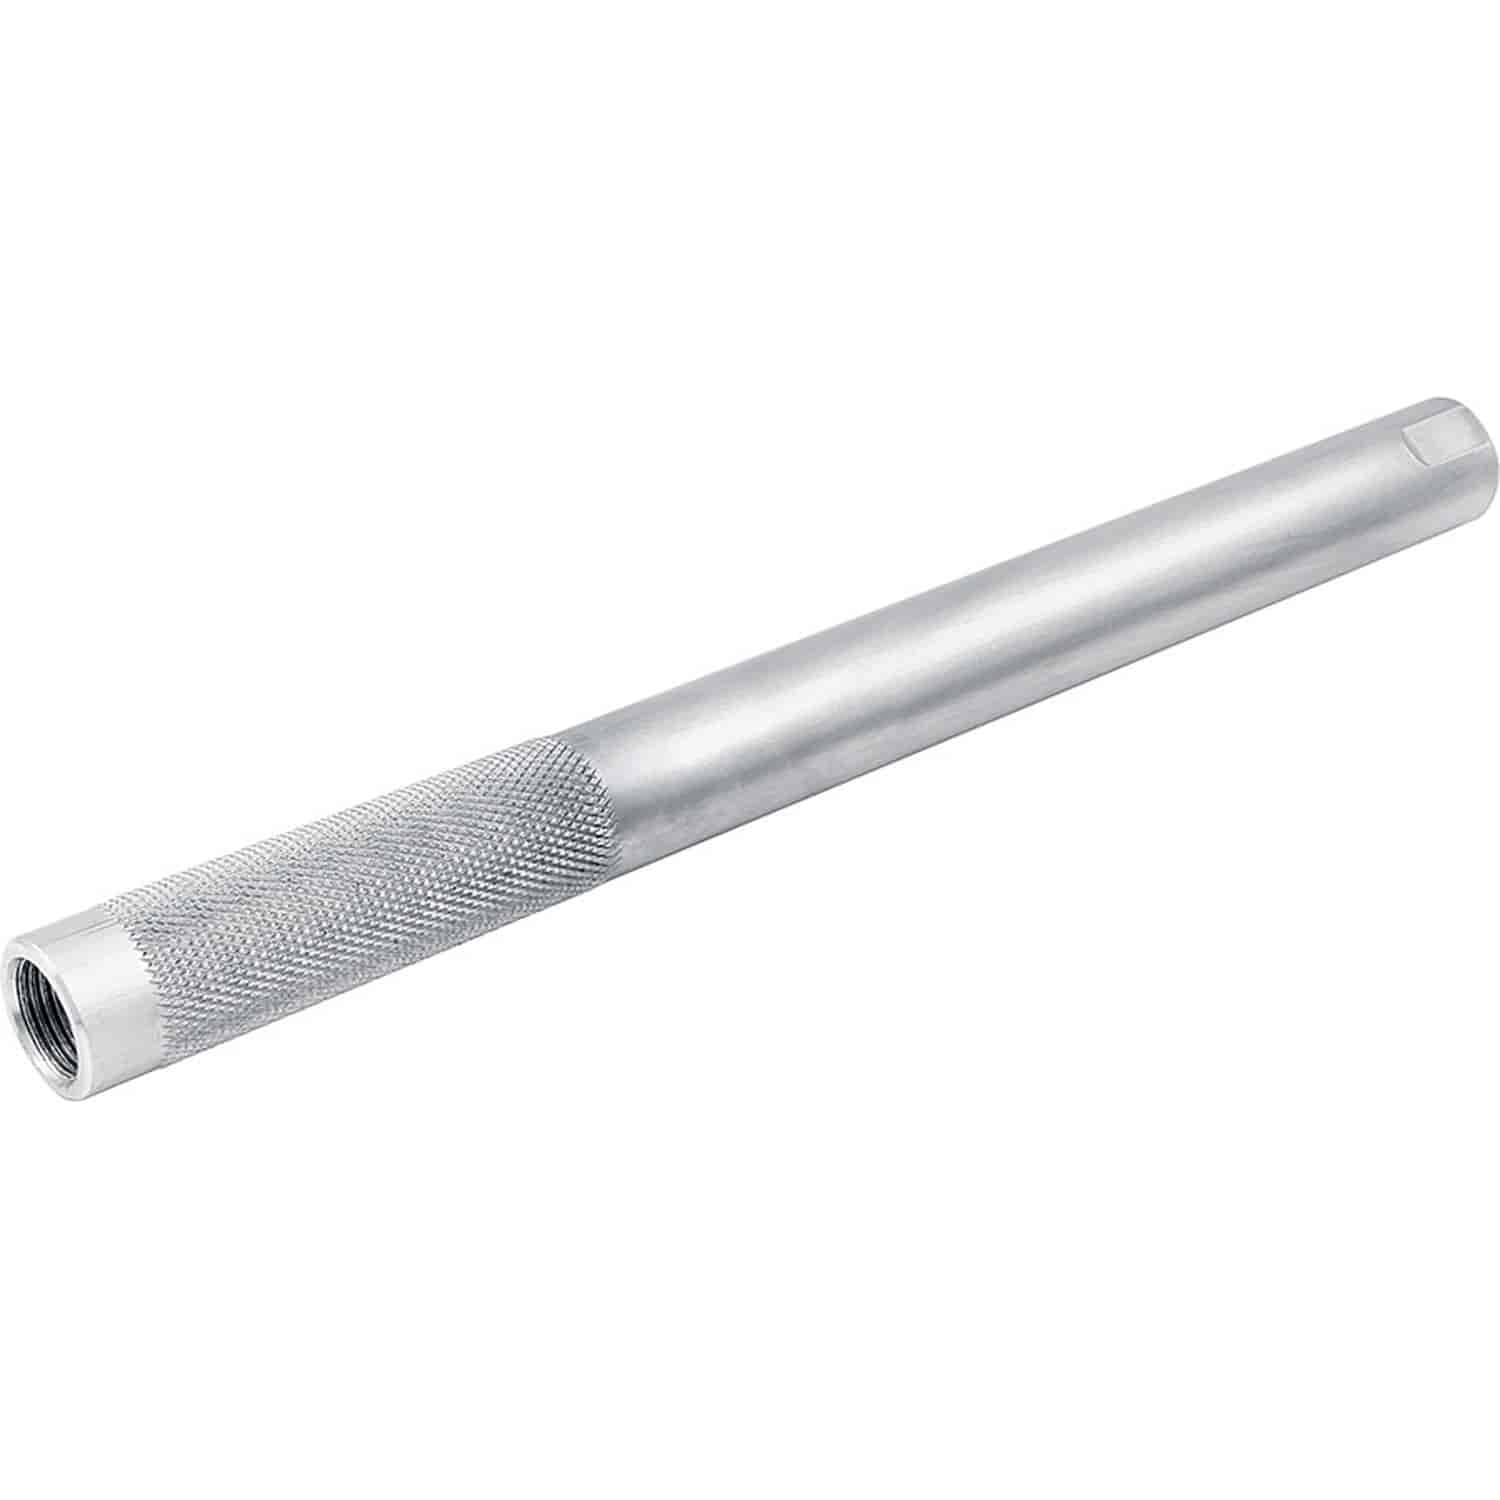 Swedged Aluminum Tie Rod Tube Length: 19"